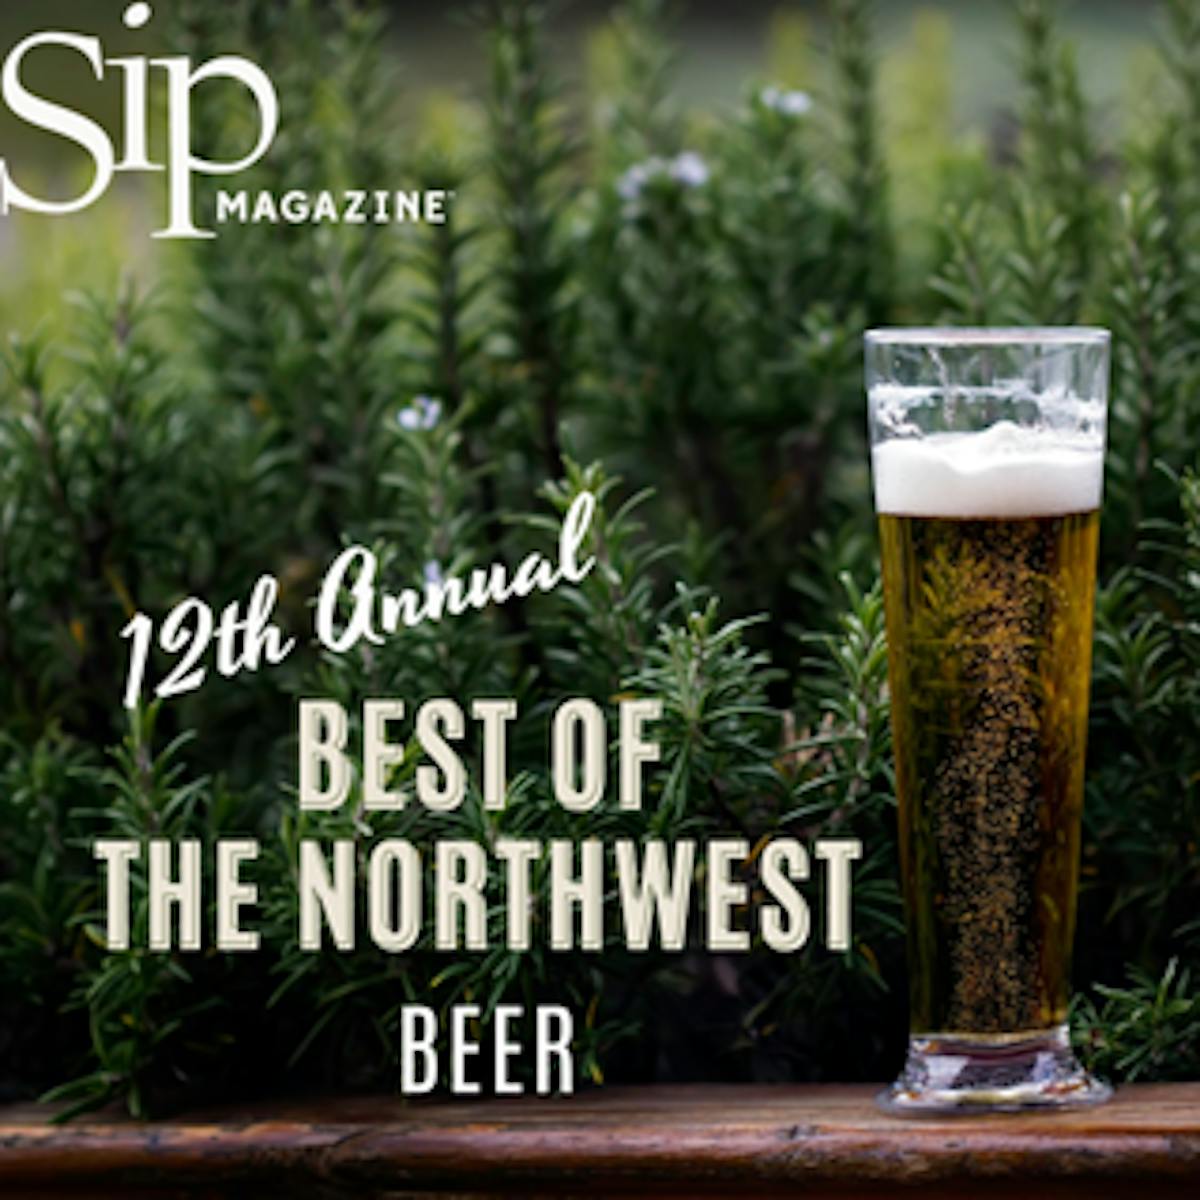 Pike Brewing Sip Magazine Award